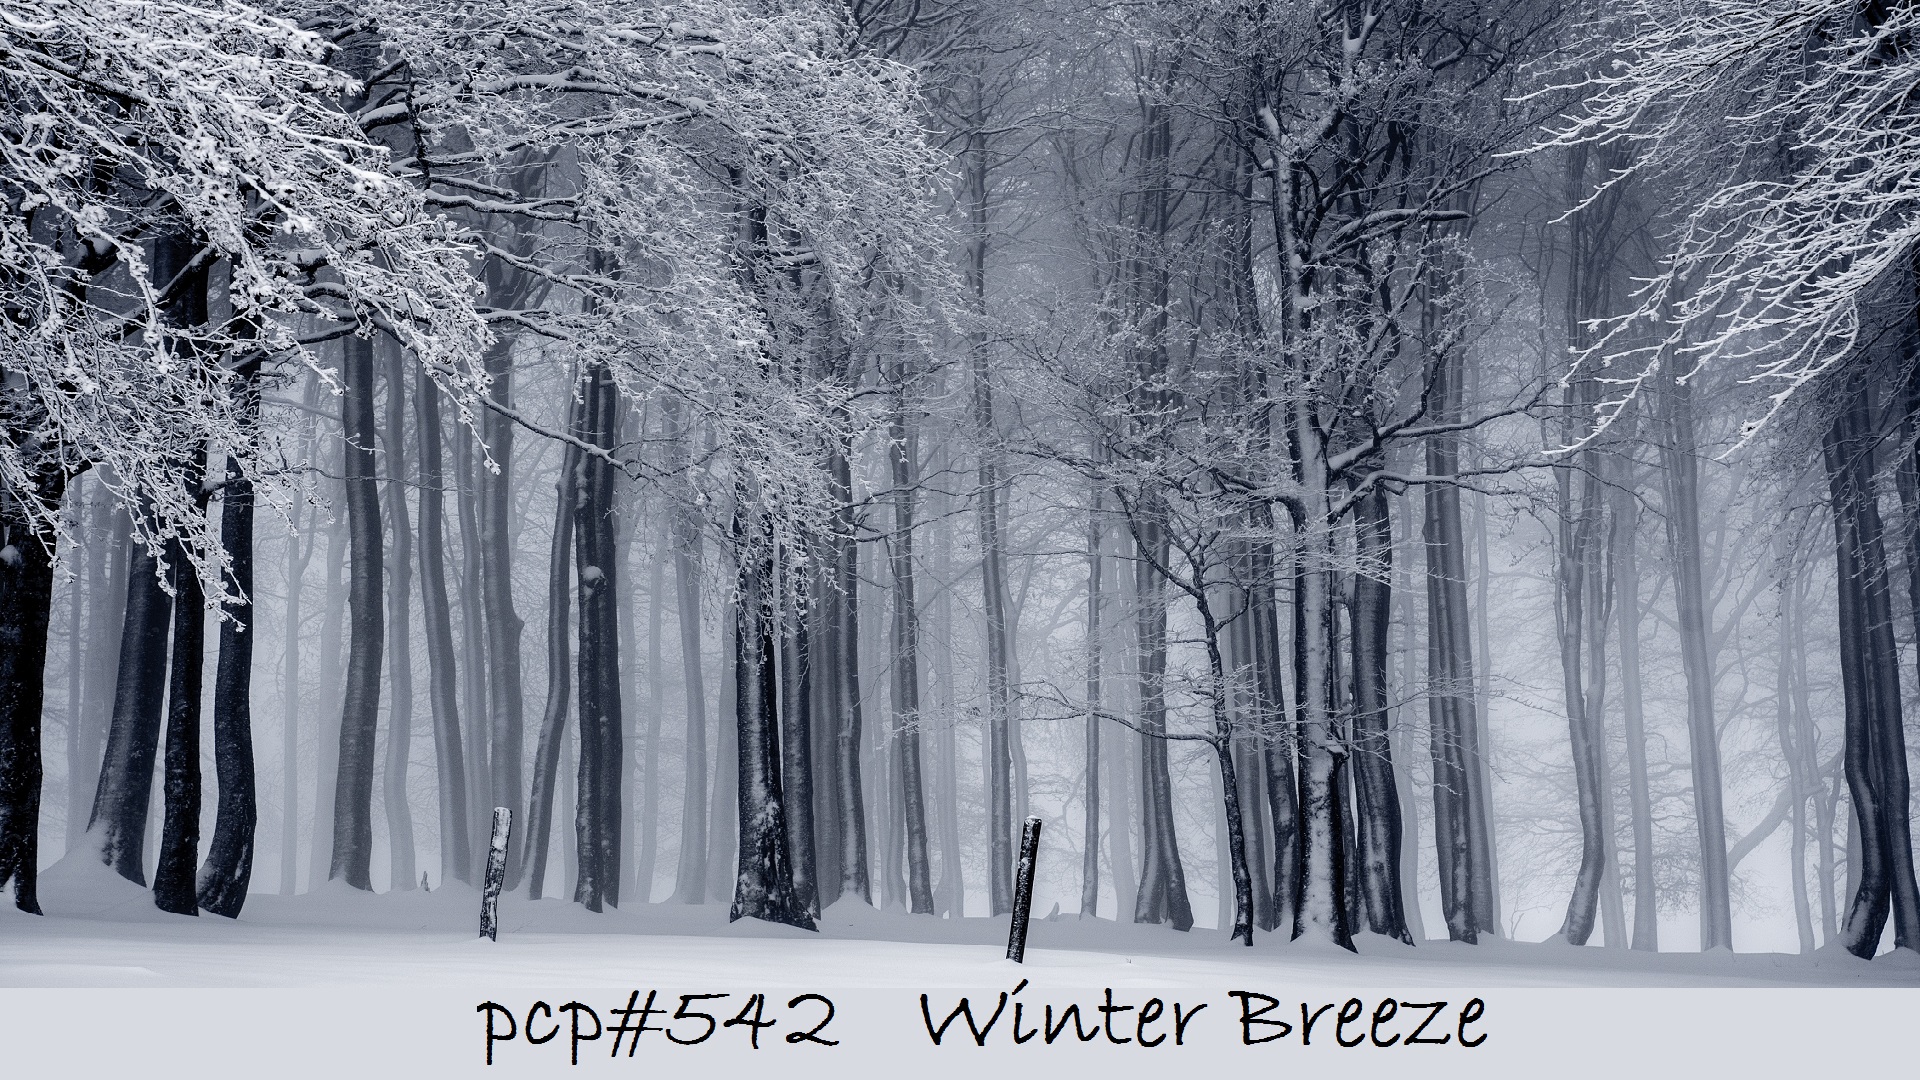 PCP#542... Winter Breeze